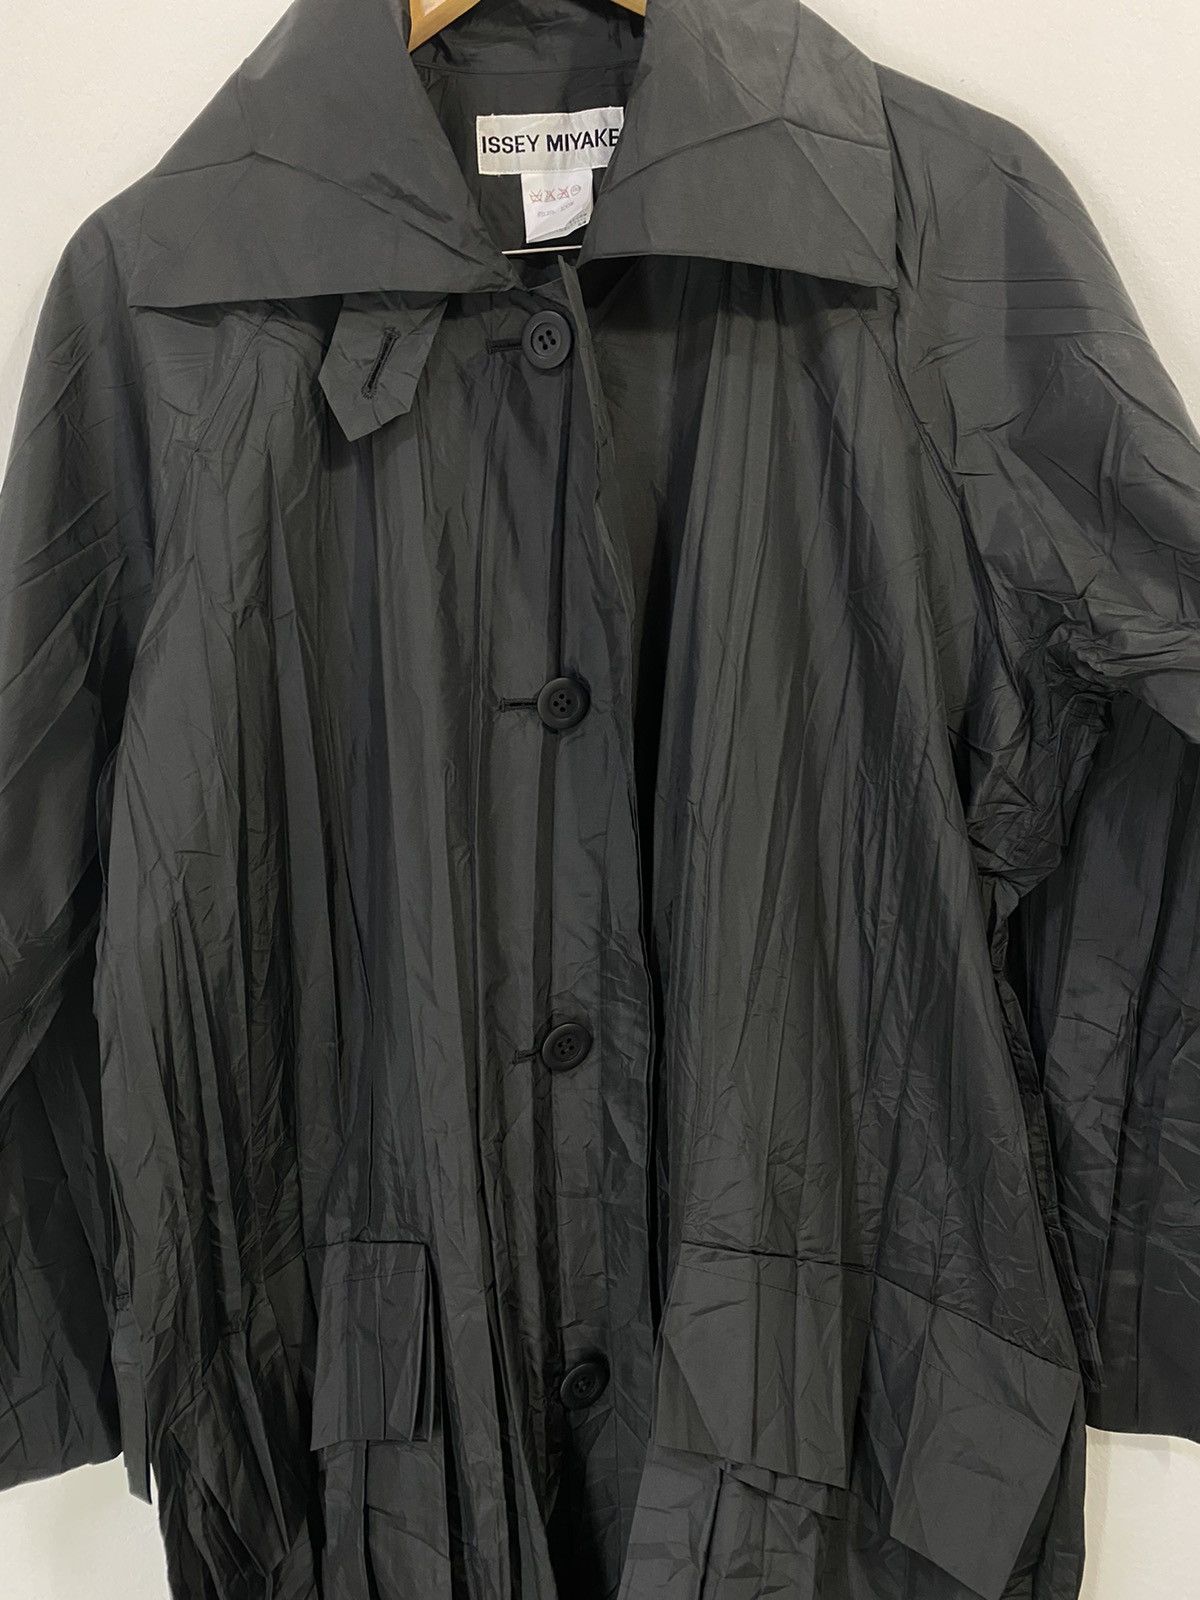 Rare Issey Miyake Wrinkle Pleated Long Jacket Design Rare - 5